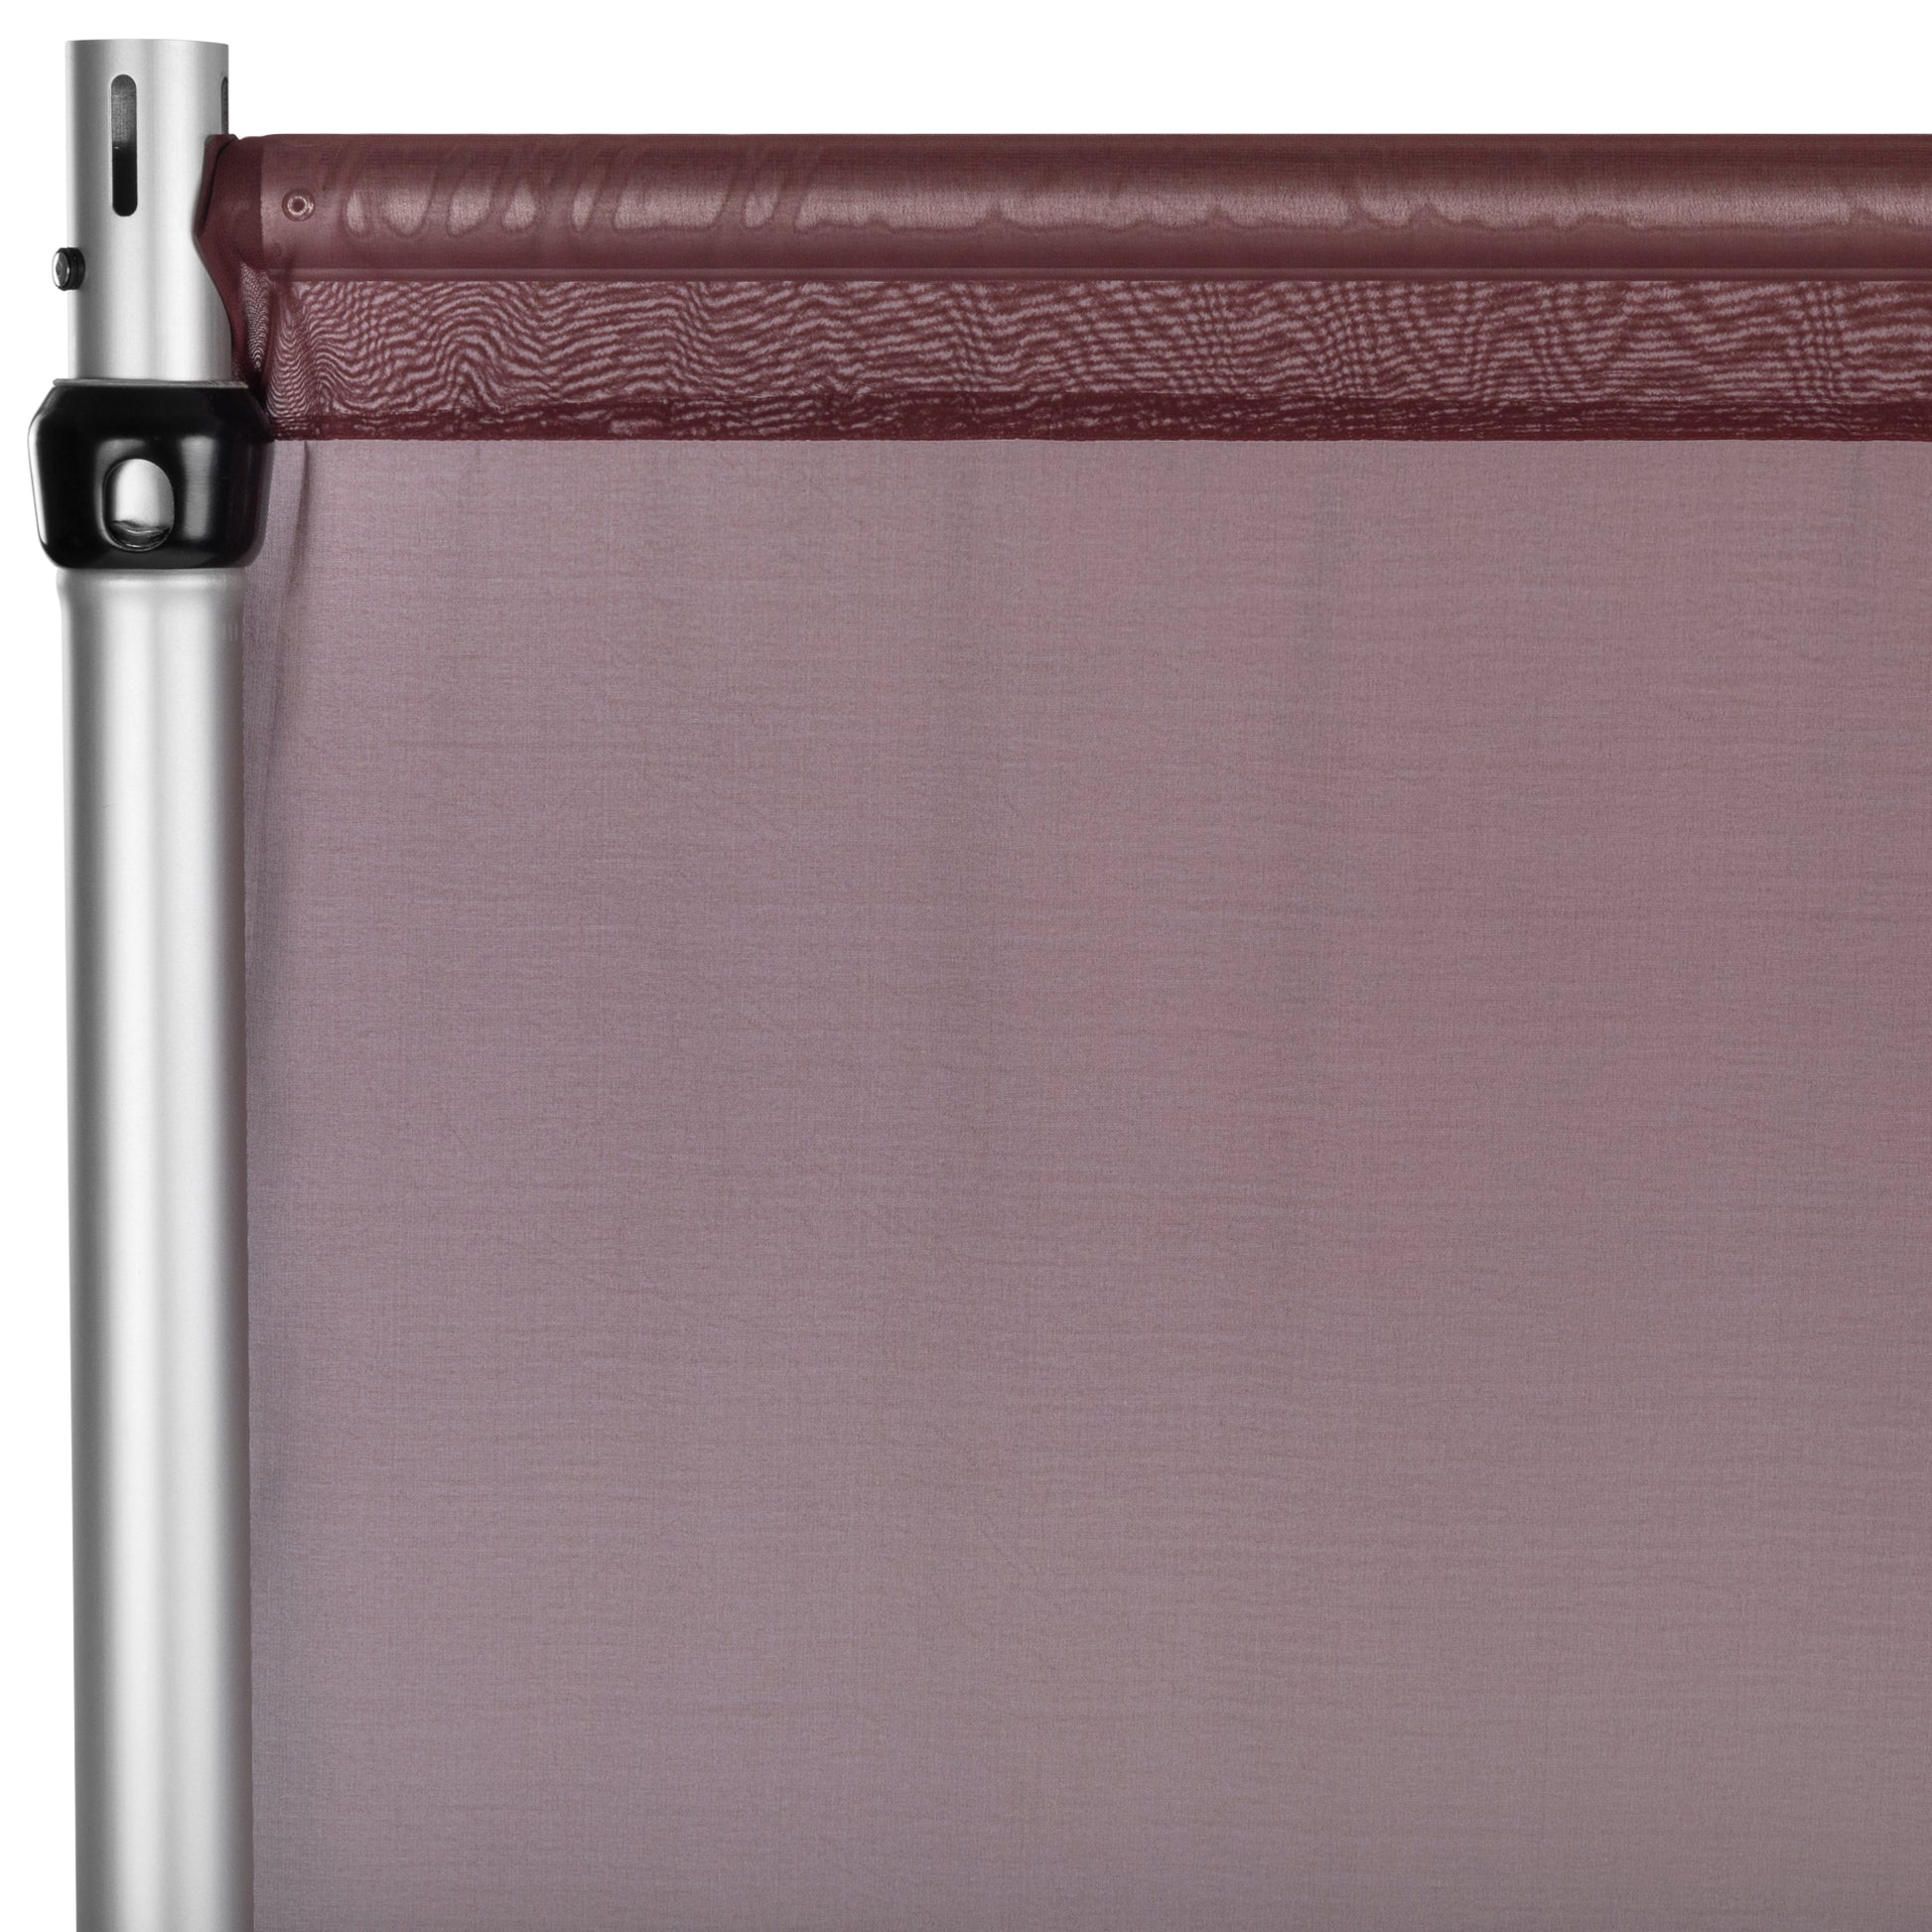 Chiffon Curtain Drape 12ft H x 58" W Panel - Burgundy - CV Linens